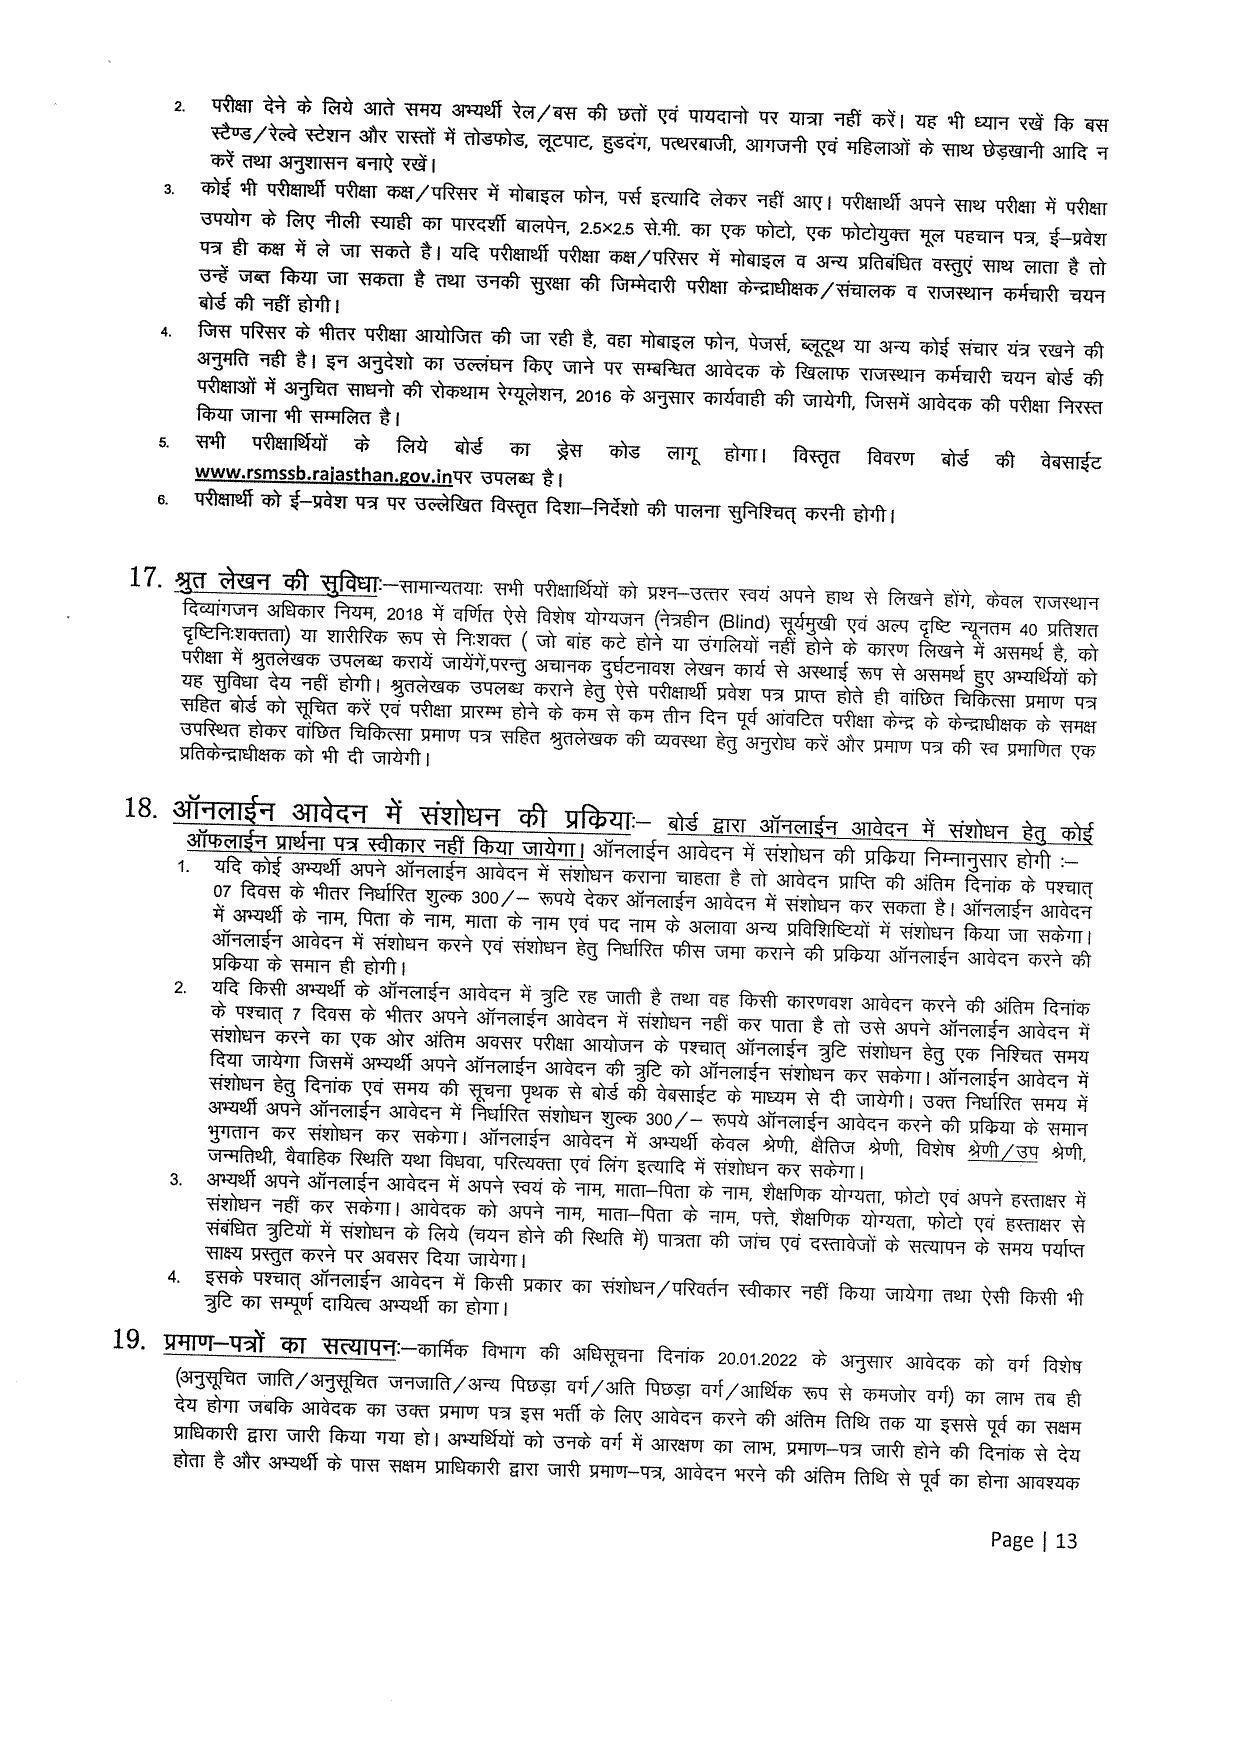 Vacancy Details For Rajasthan RSMSSB Livestock Assistant Online Form - Page 14